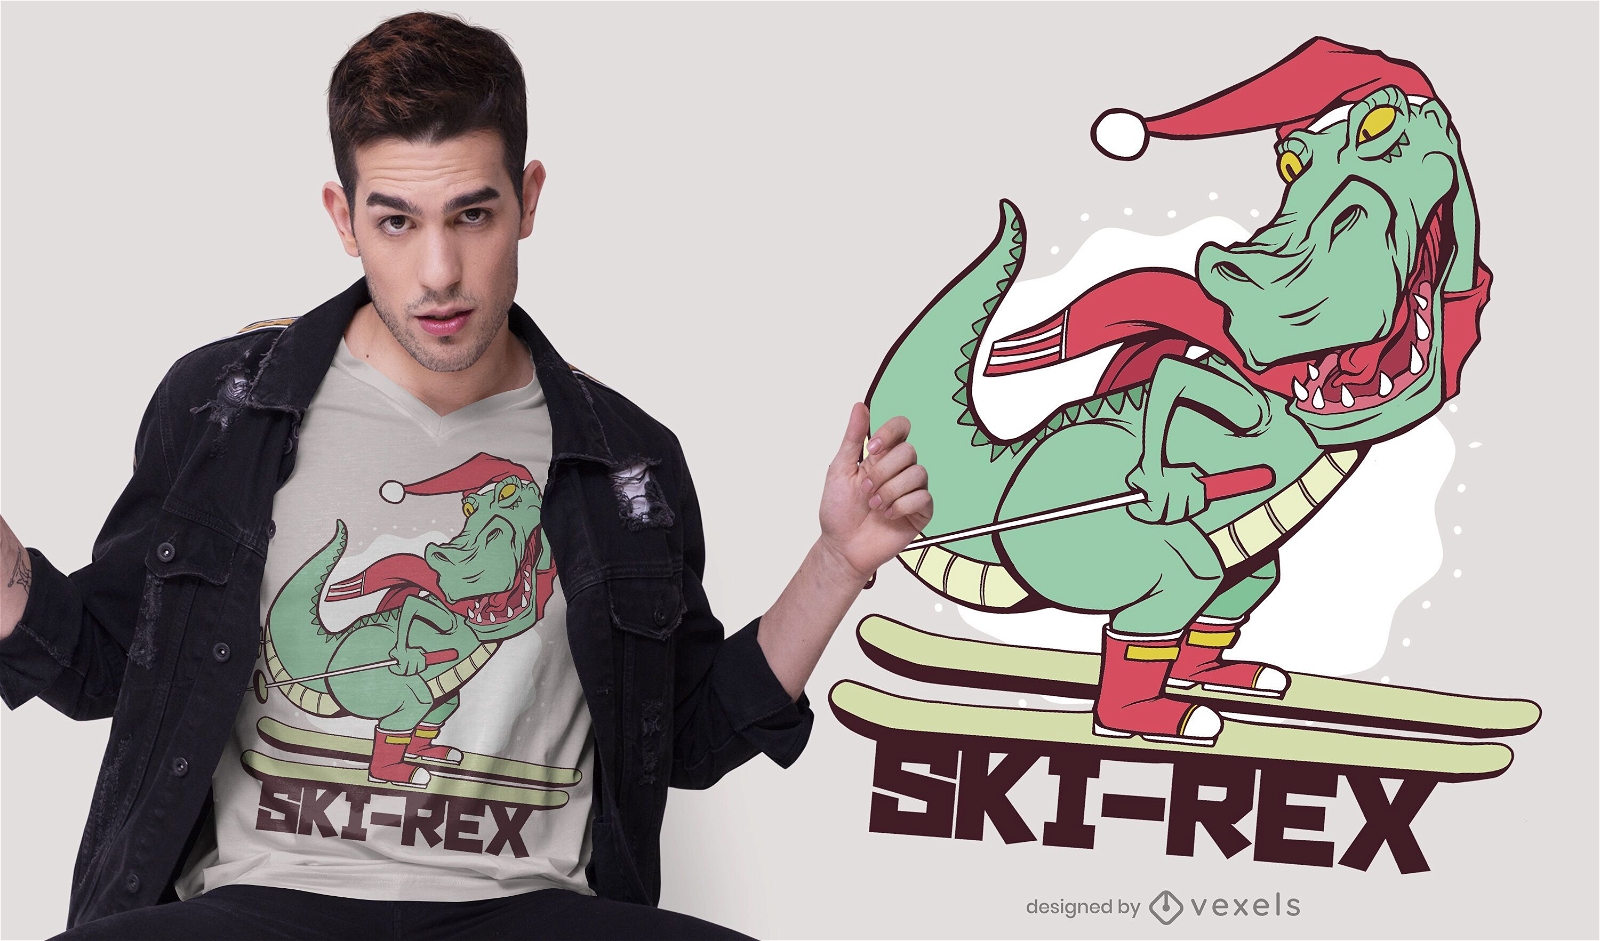 Ski t-rex t-shirt design